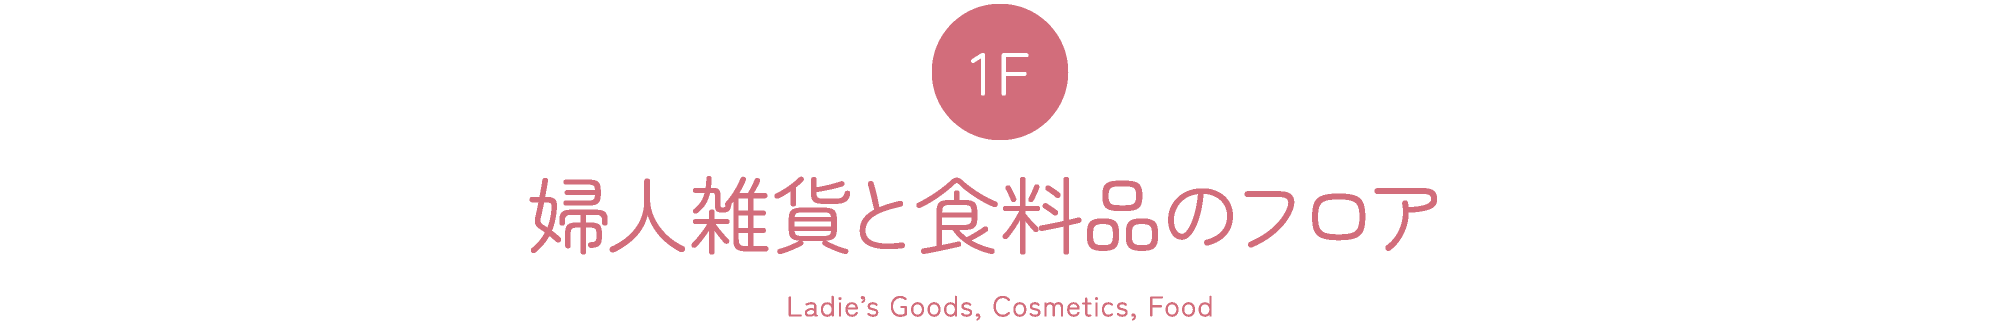 1F 婦人雑貨と食料品のフロア Ladie’s Goods, Cosmetics, Food